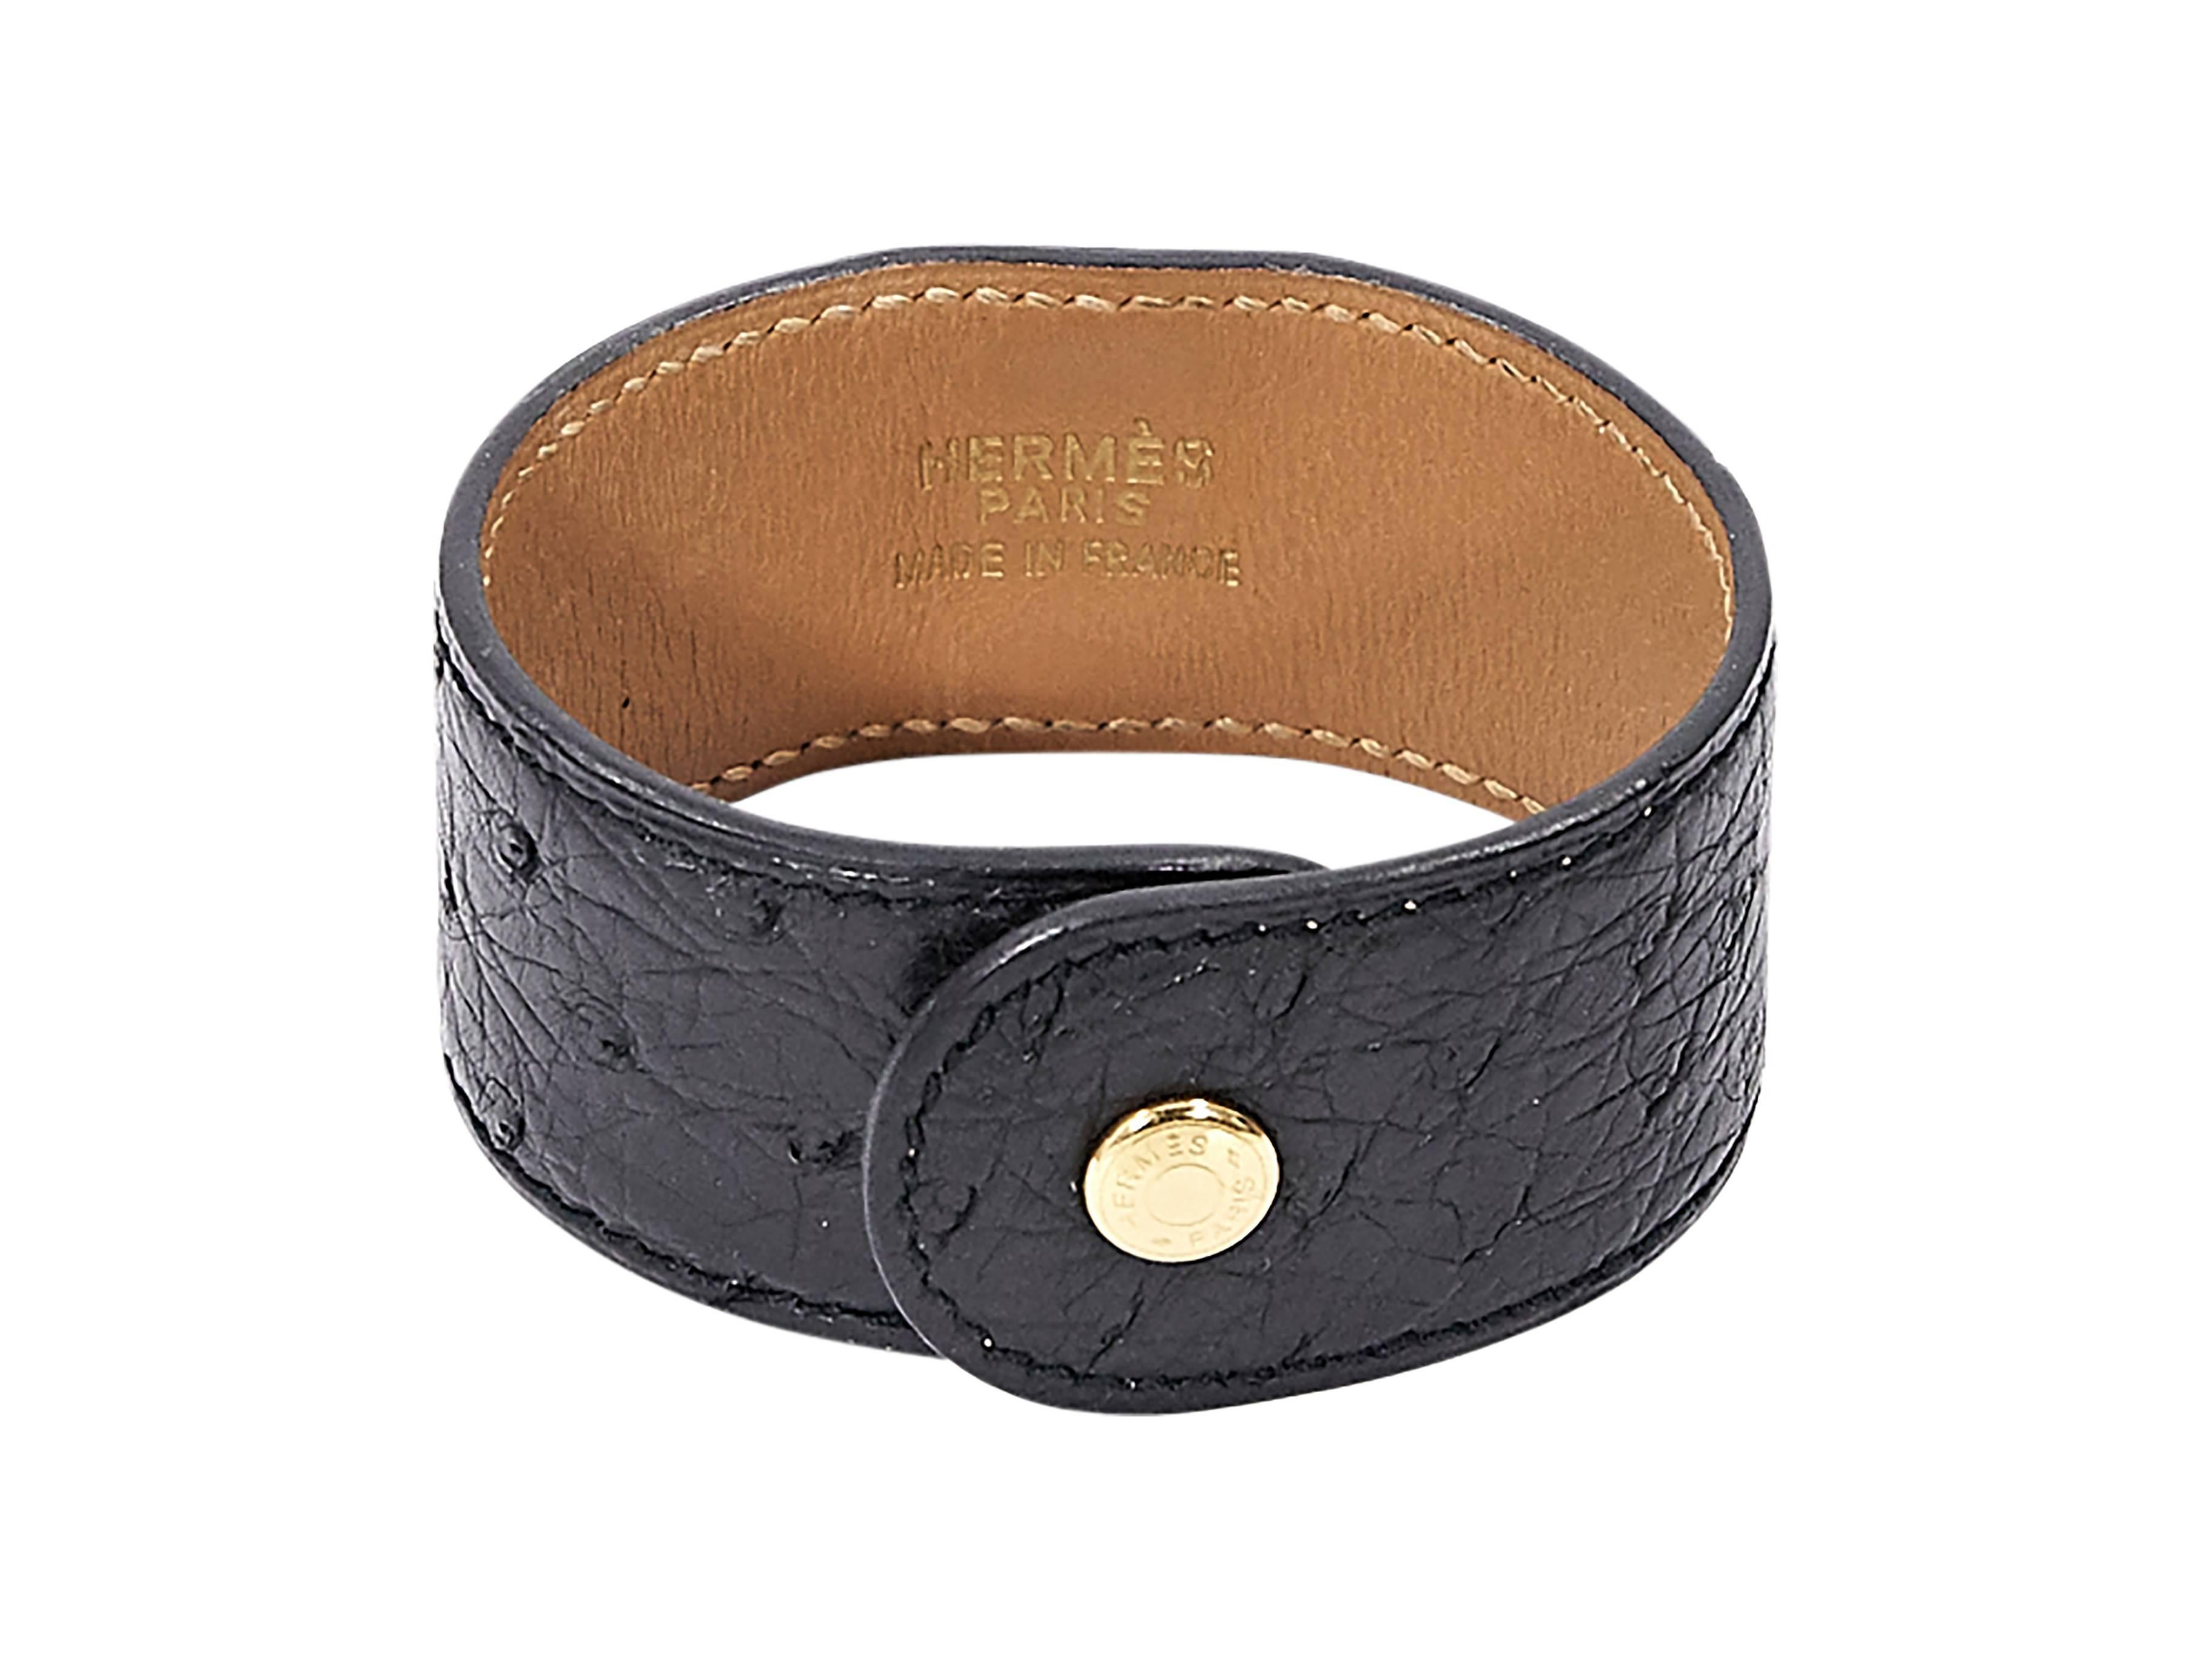 Product details:  Black ostrich Courchevel Medor bracelet by Hermès.  Snap closure.  Goldtone hardware. 
Condition: Pre-owned. Very good.

Est. Retail $ 550.00